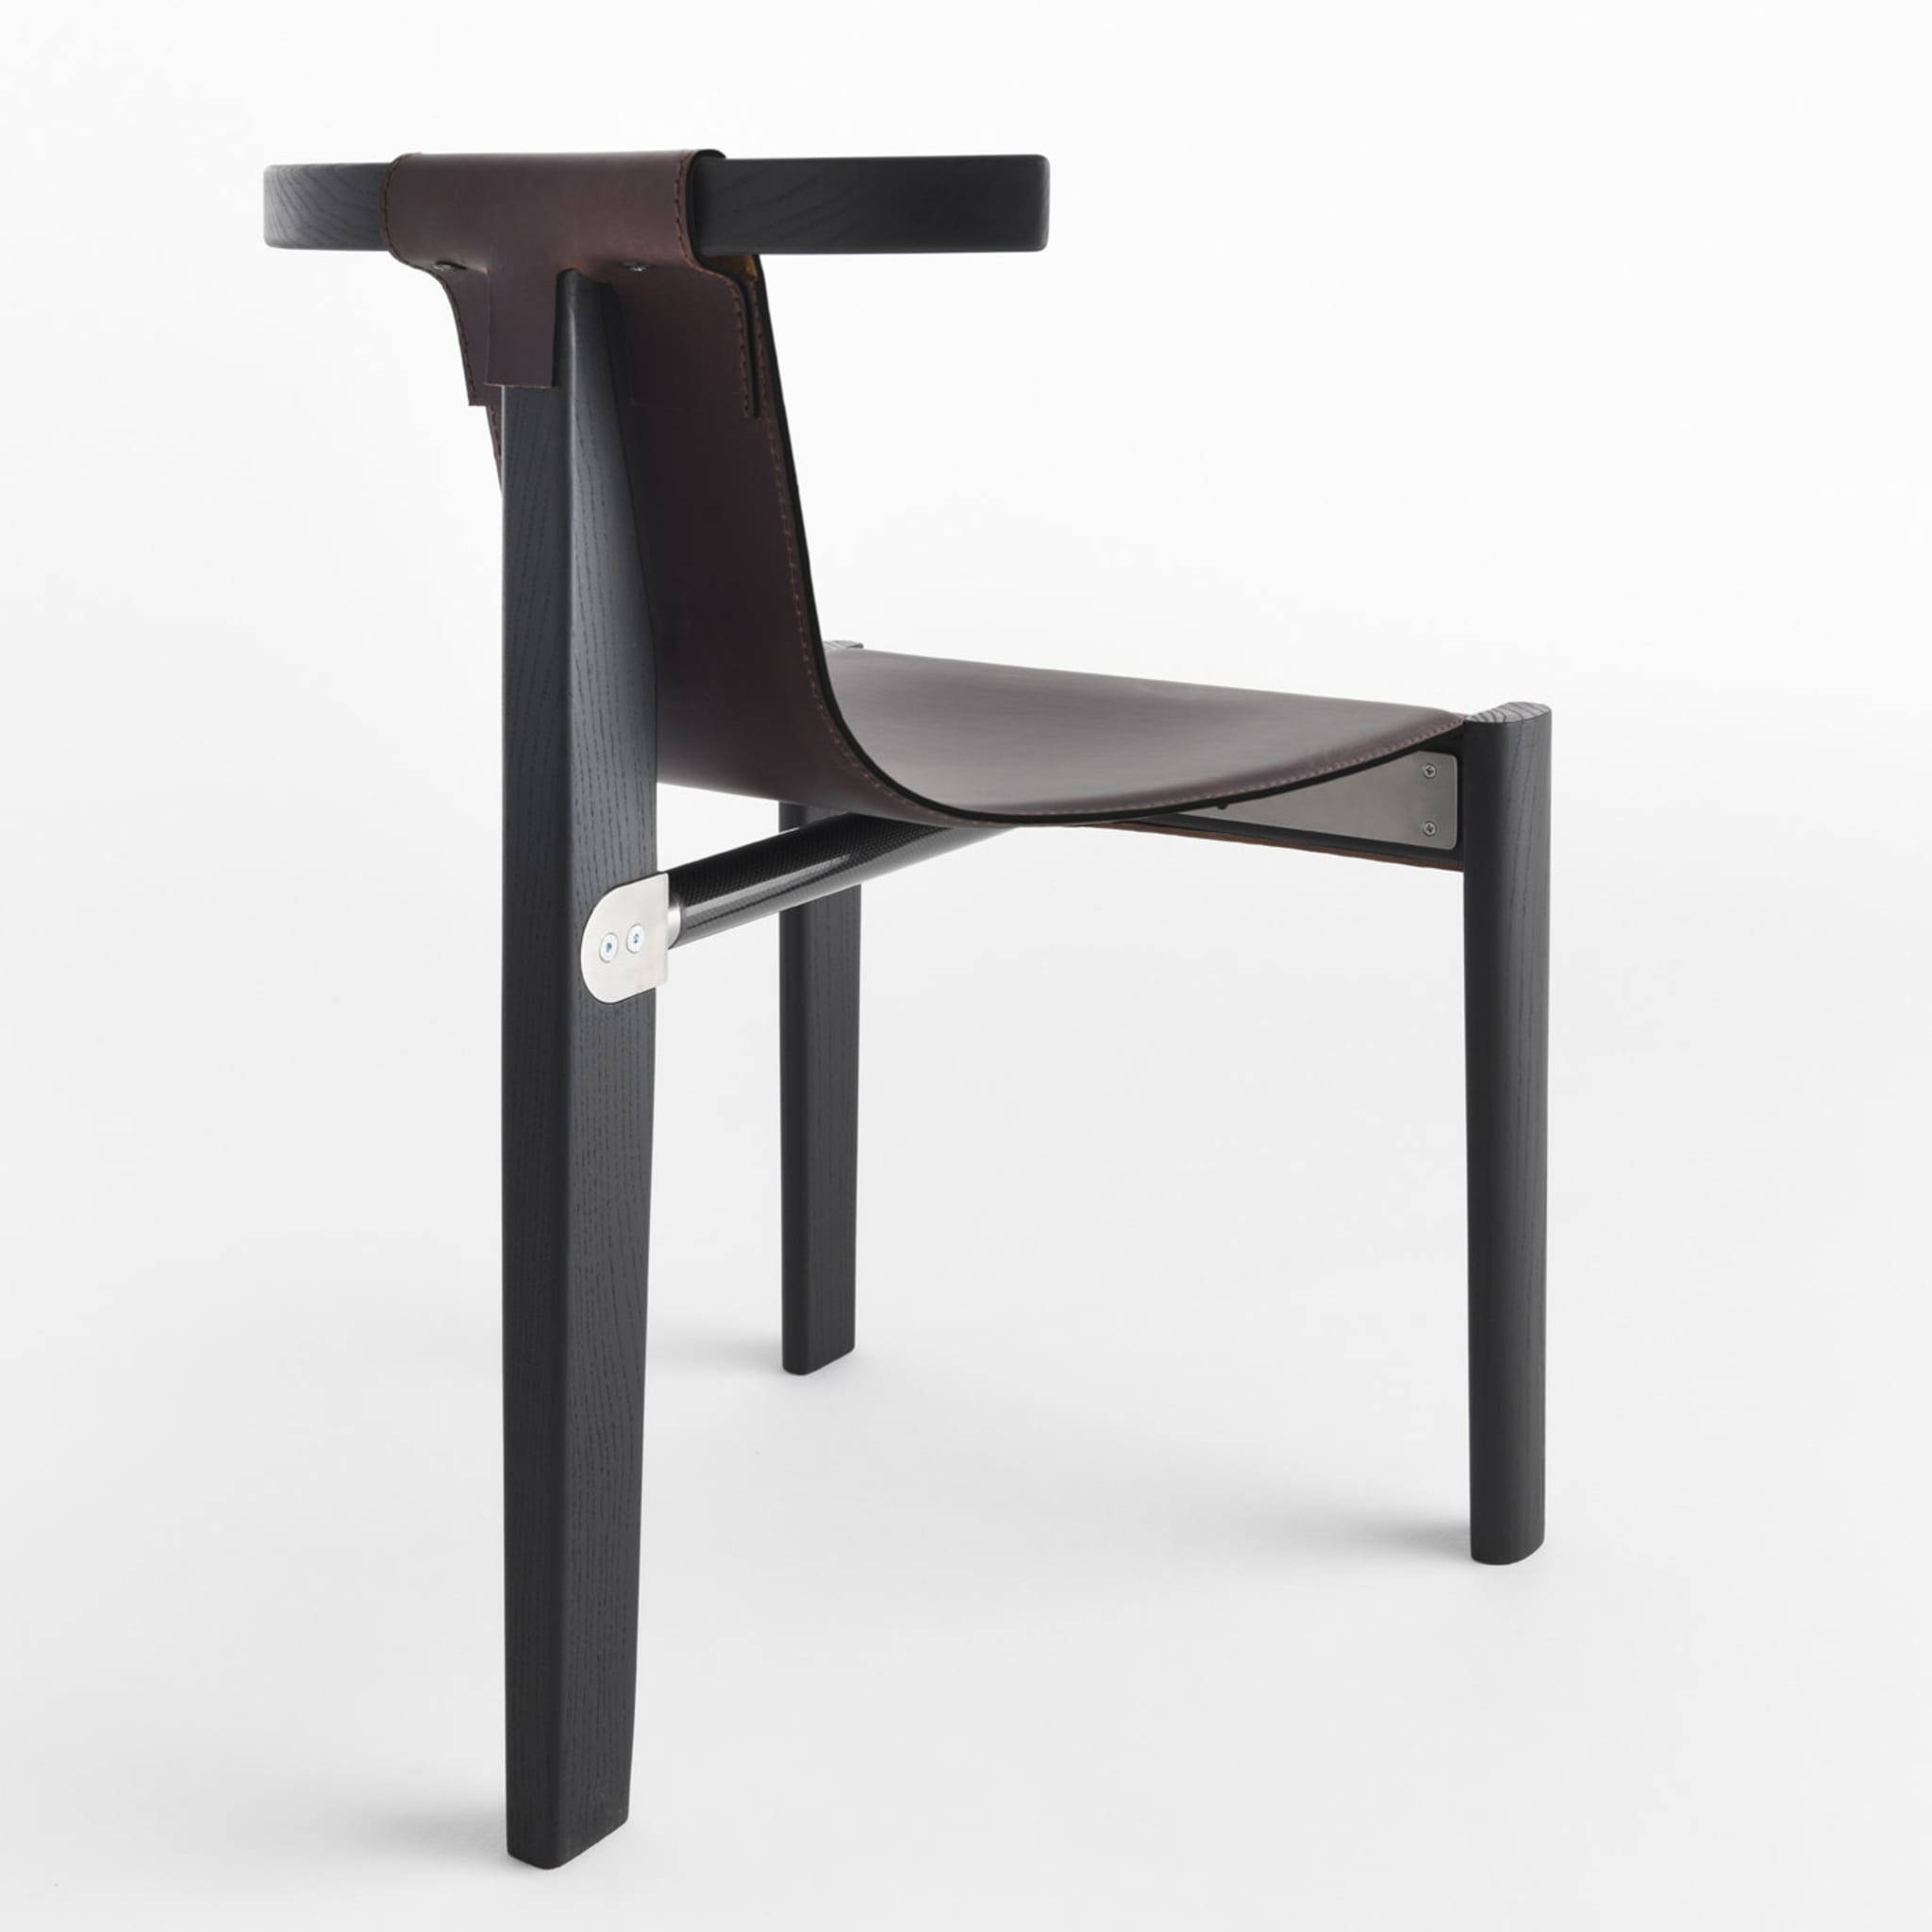 Pablita Brauner Stuhl von Marcello Pozzi - Alternative Ansicht 2